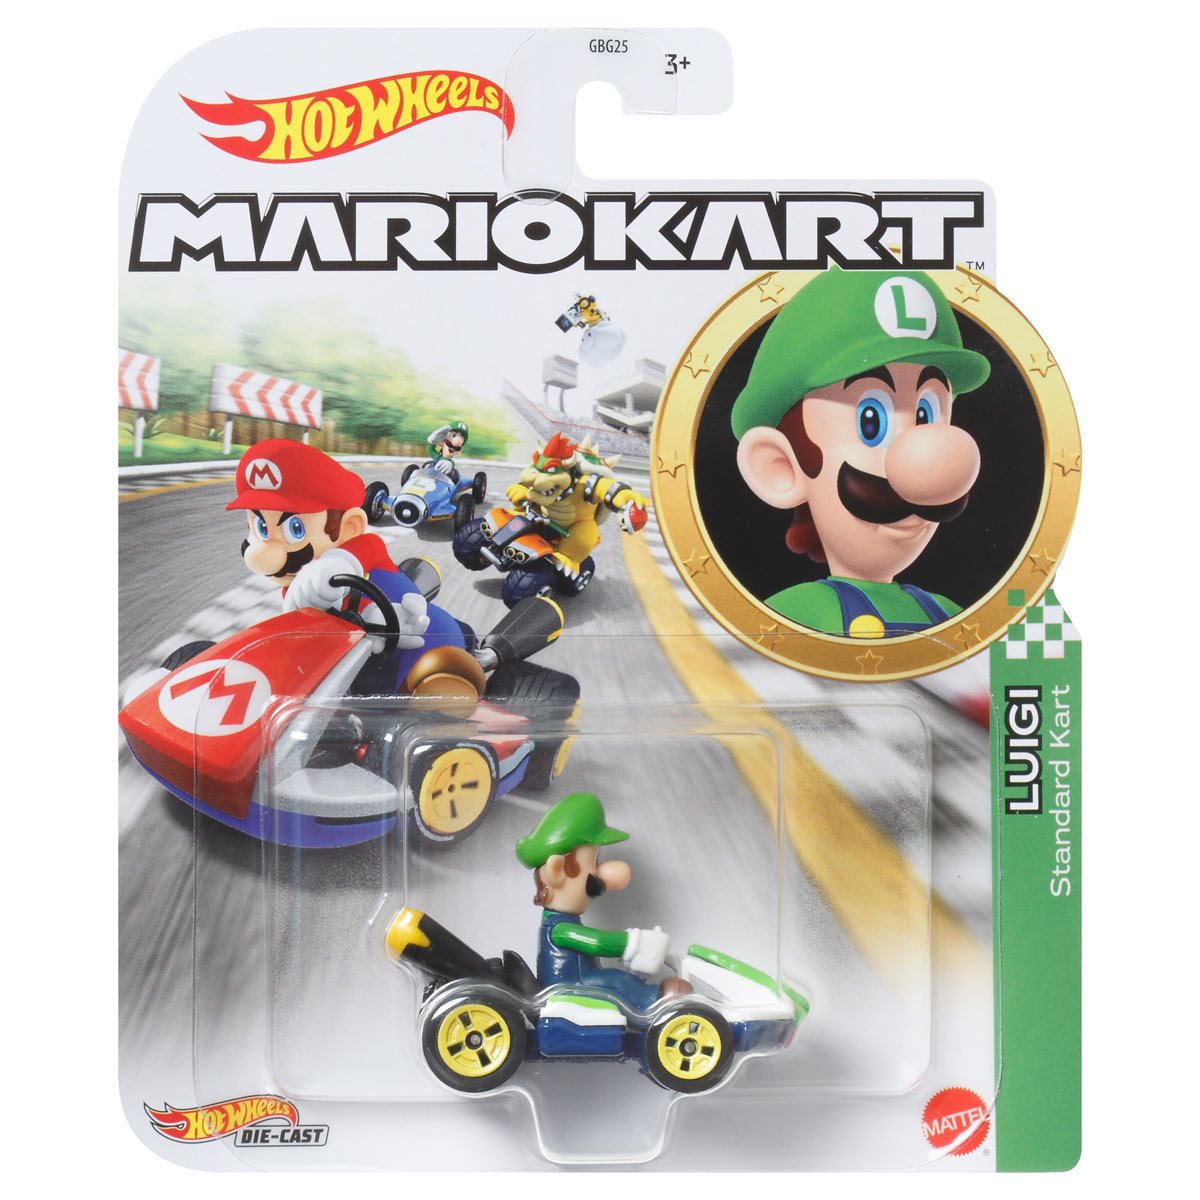 Buy Nintendo Super Mario Movie Figurine with Kart - Assorted